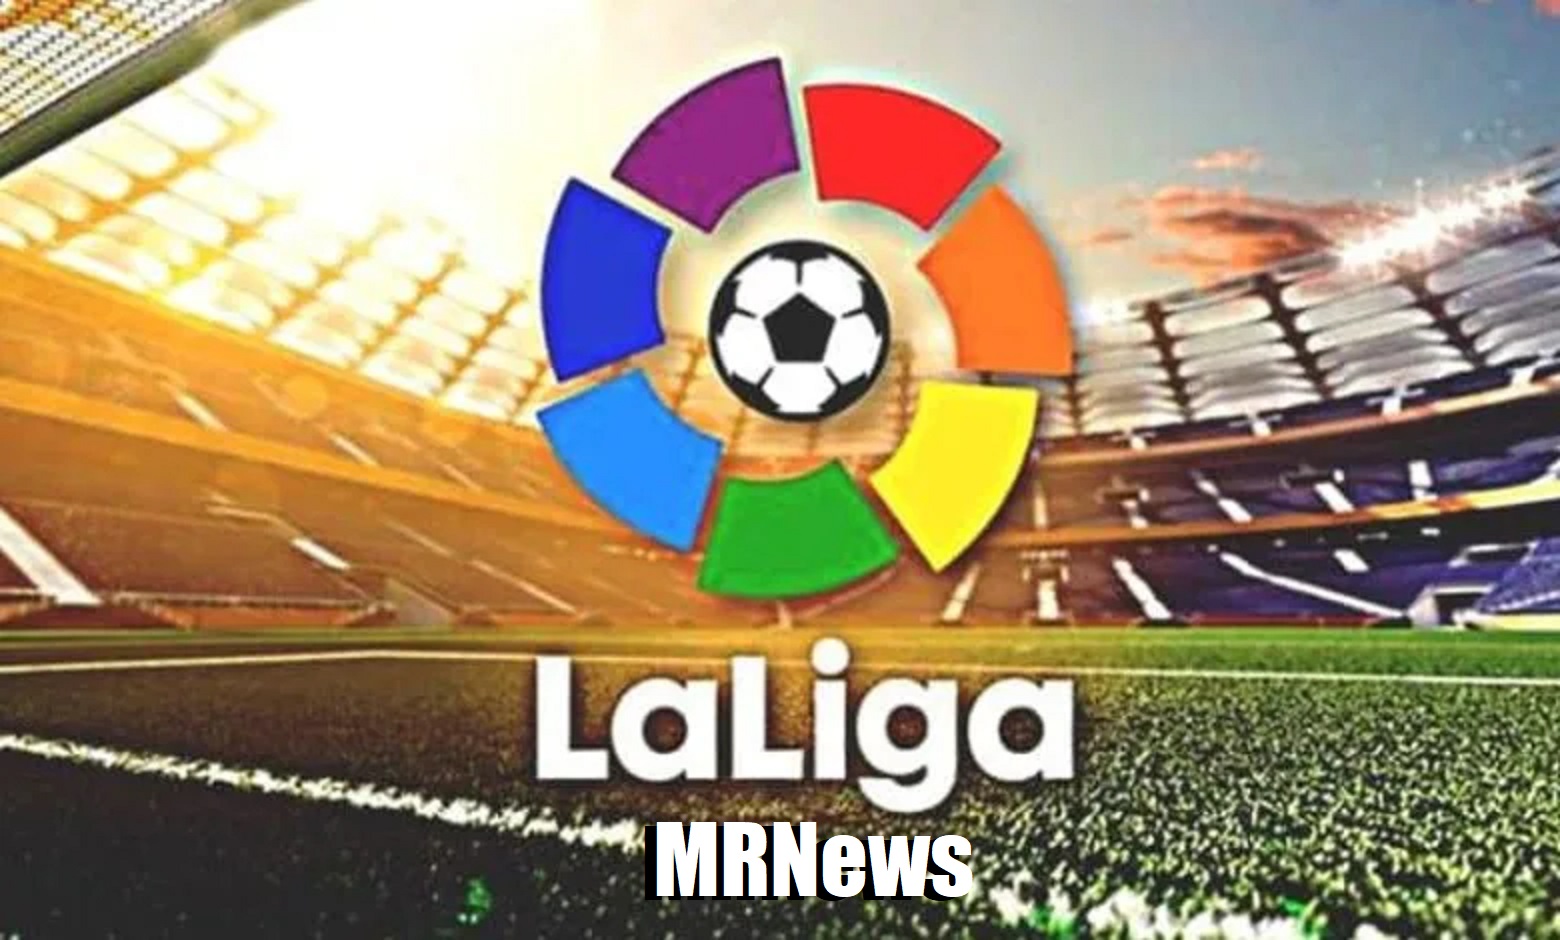 La Liga MRNews Campeonaot espanhol